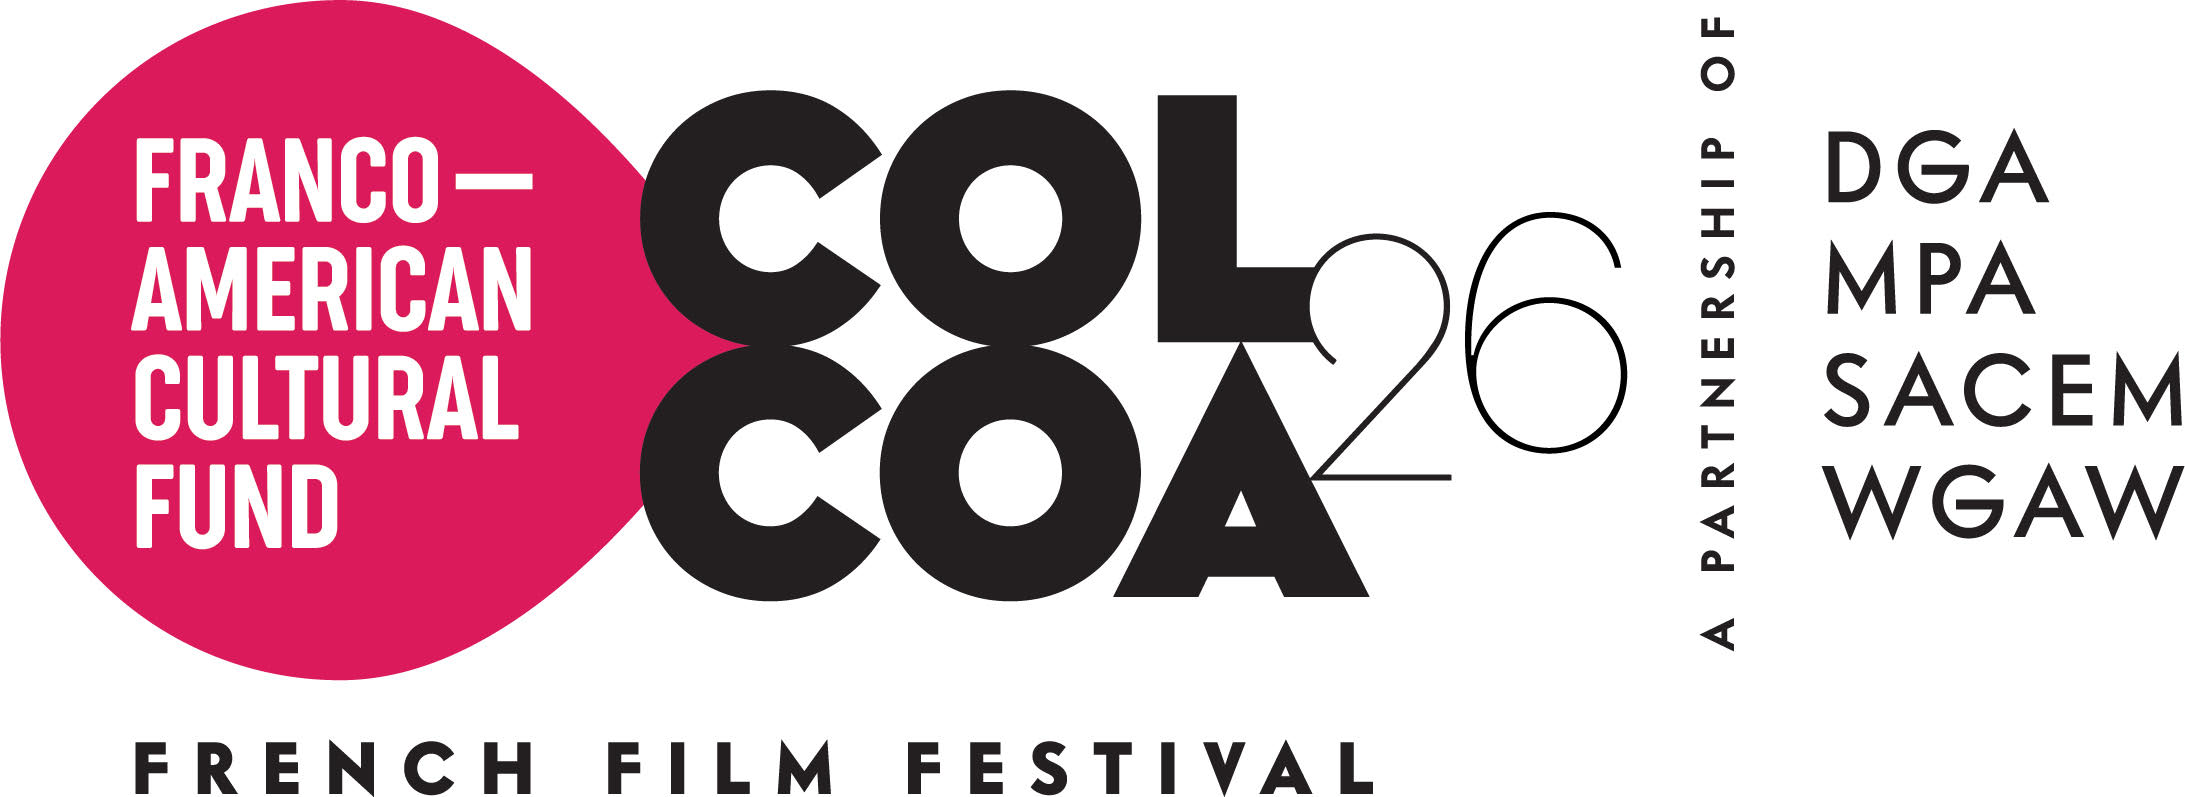 Colcoa French Film Festival